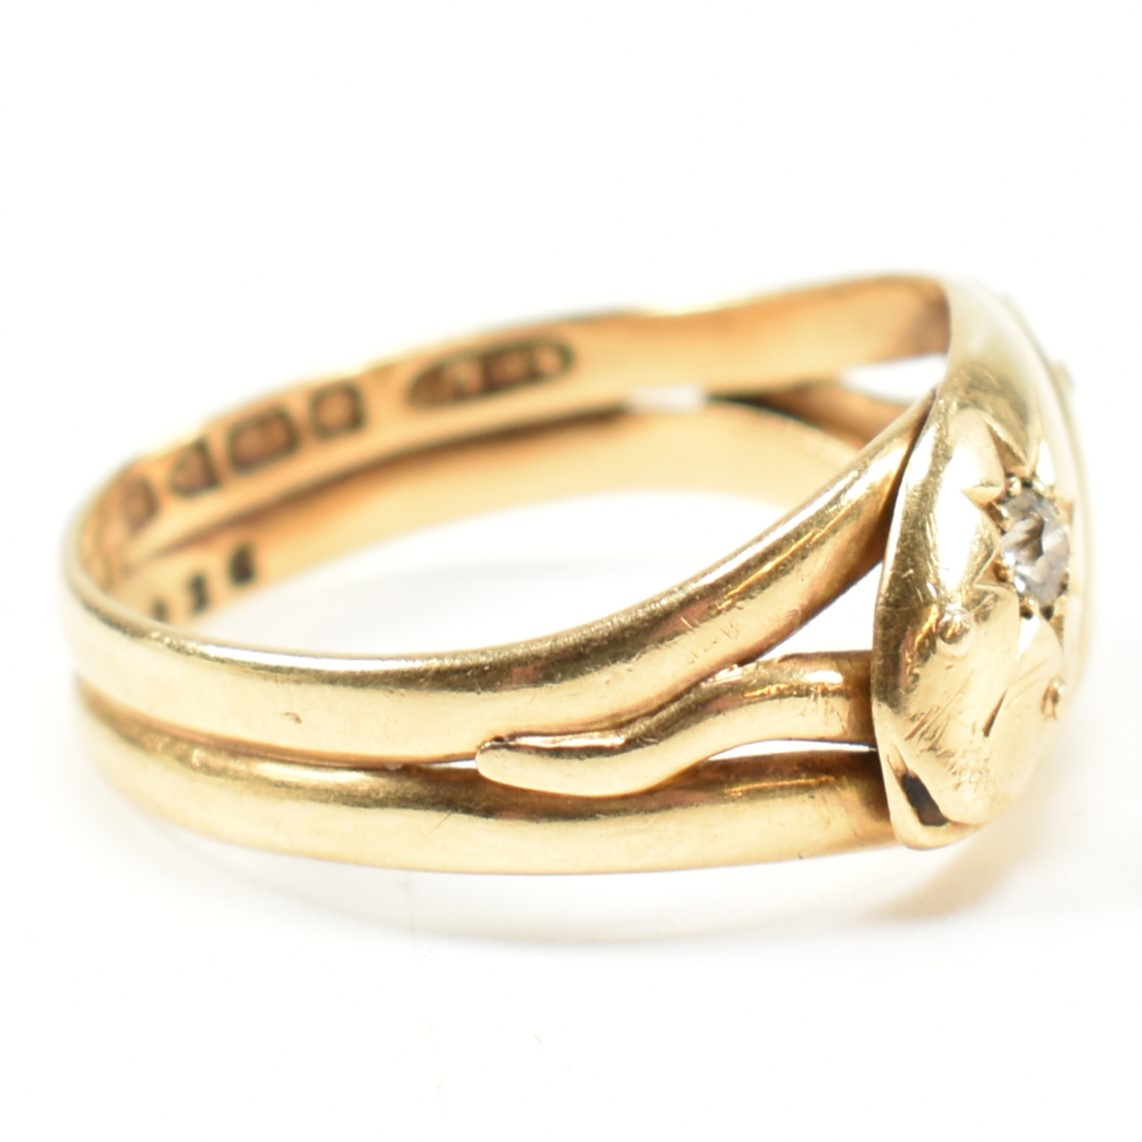 EDWARDIAN HALLMARKED 18CT GOLD & DIAMOND TWIN SNAKE RING - Image 5 of 8